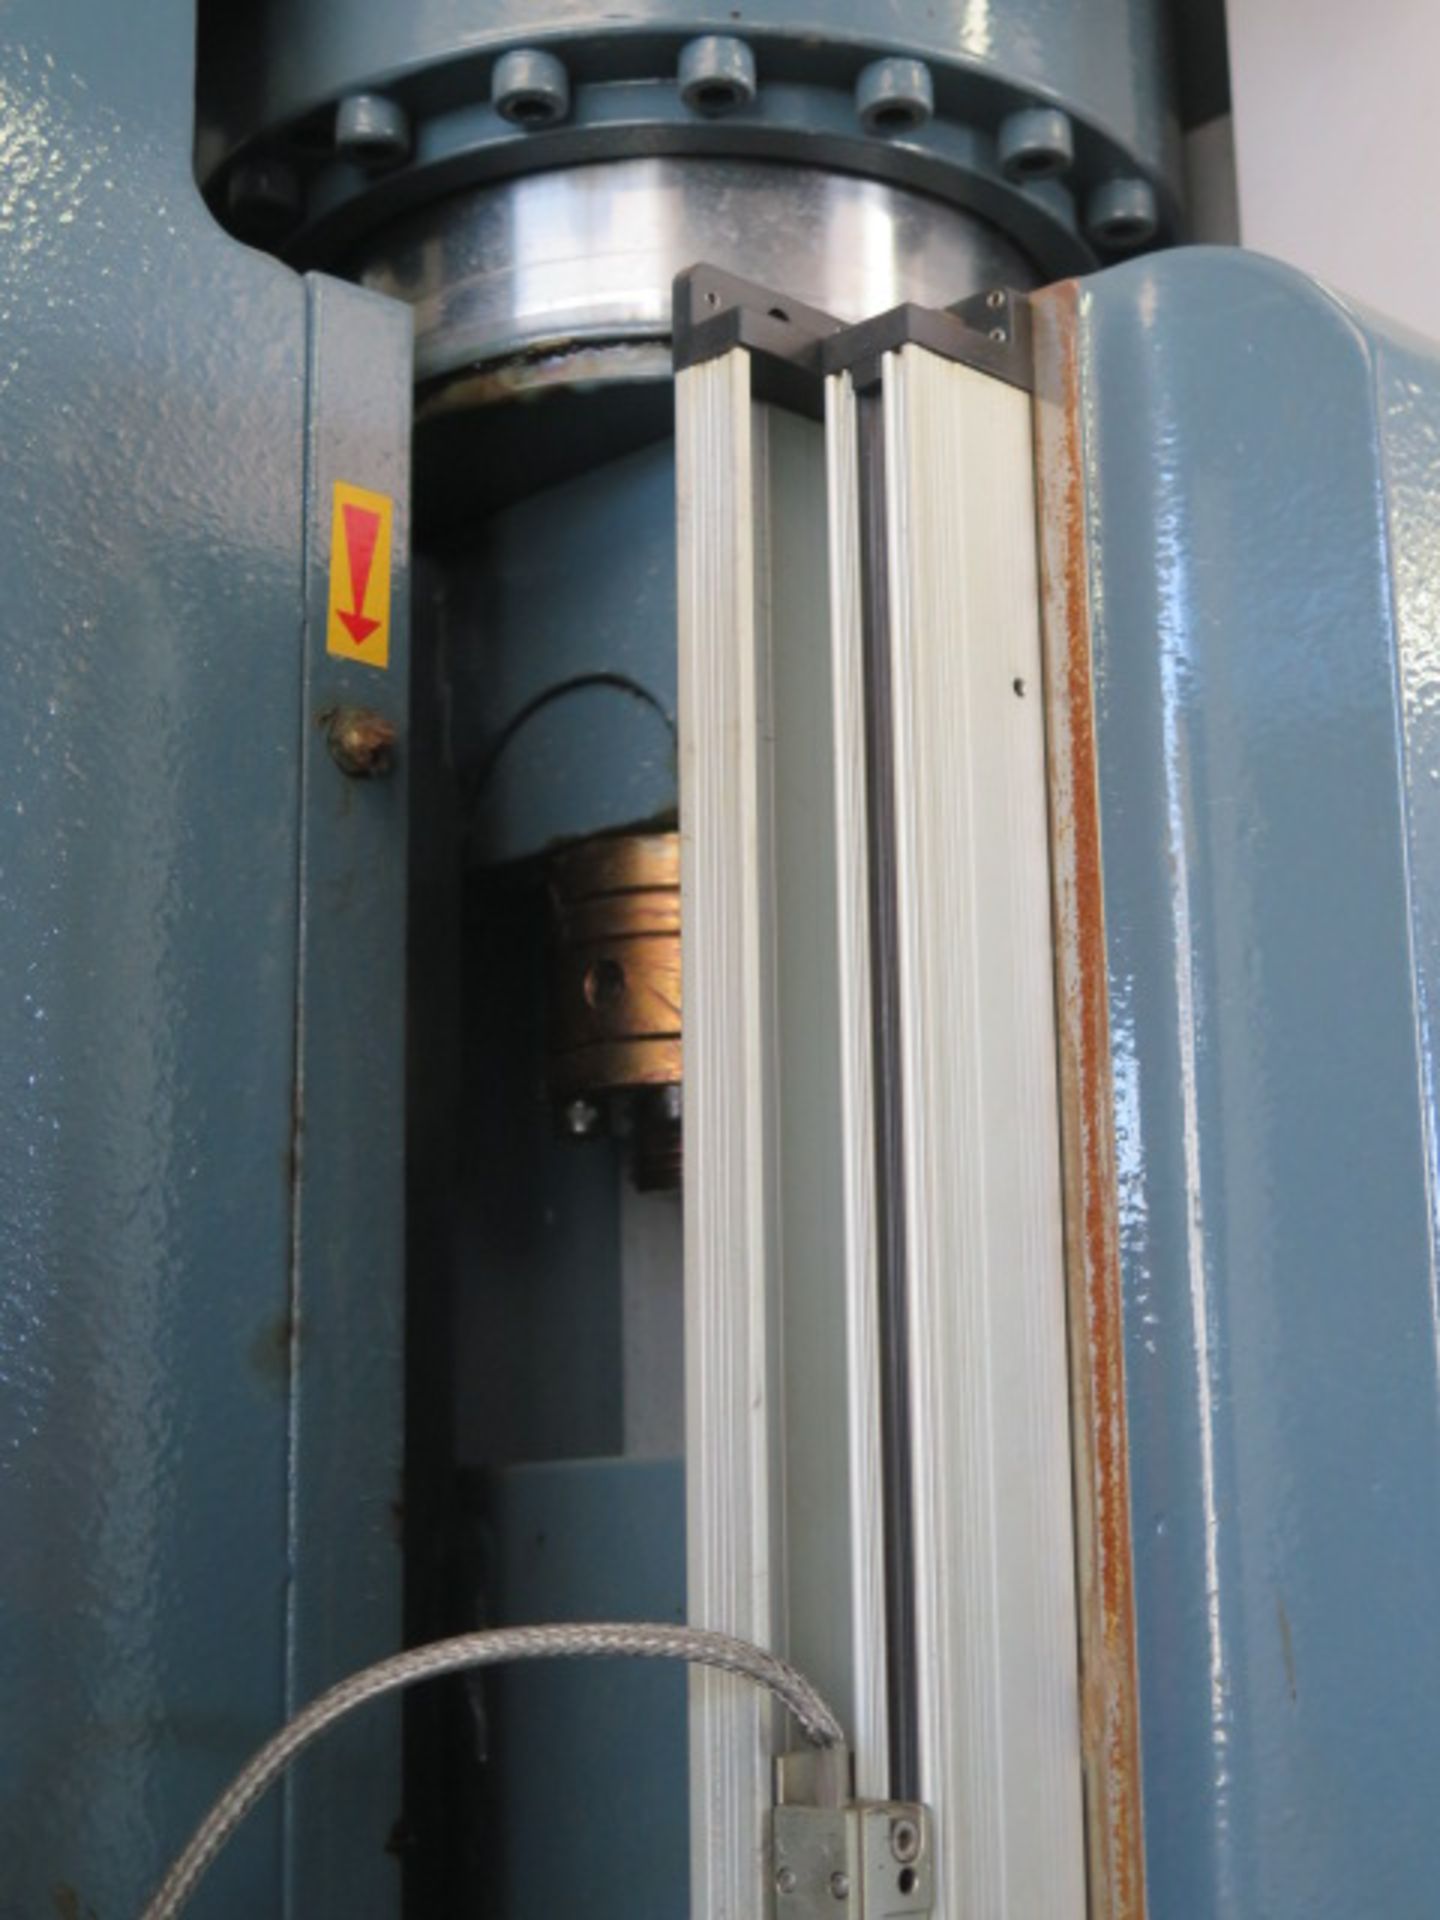 2007 Durma type E-30160 176 Ton x 10’ CNC Hydraulic Press Brake s/n 7531072346-E w/ Delem DA-51 - Image 21 of 21